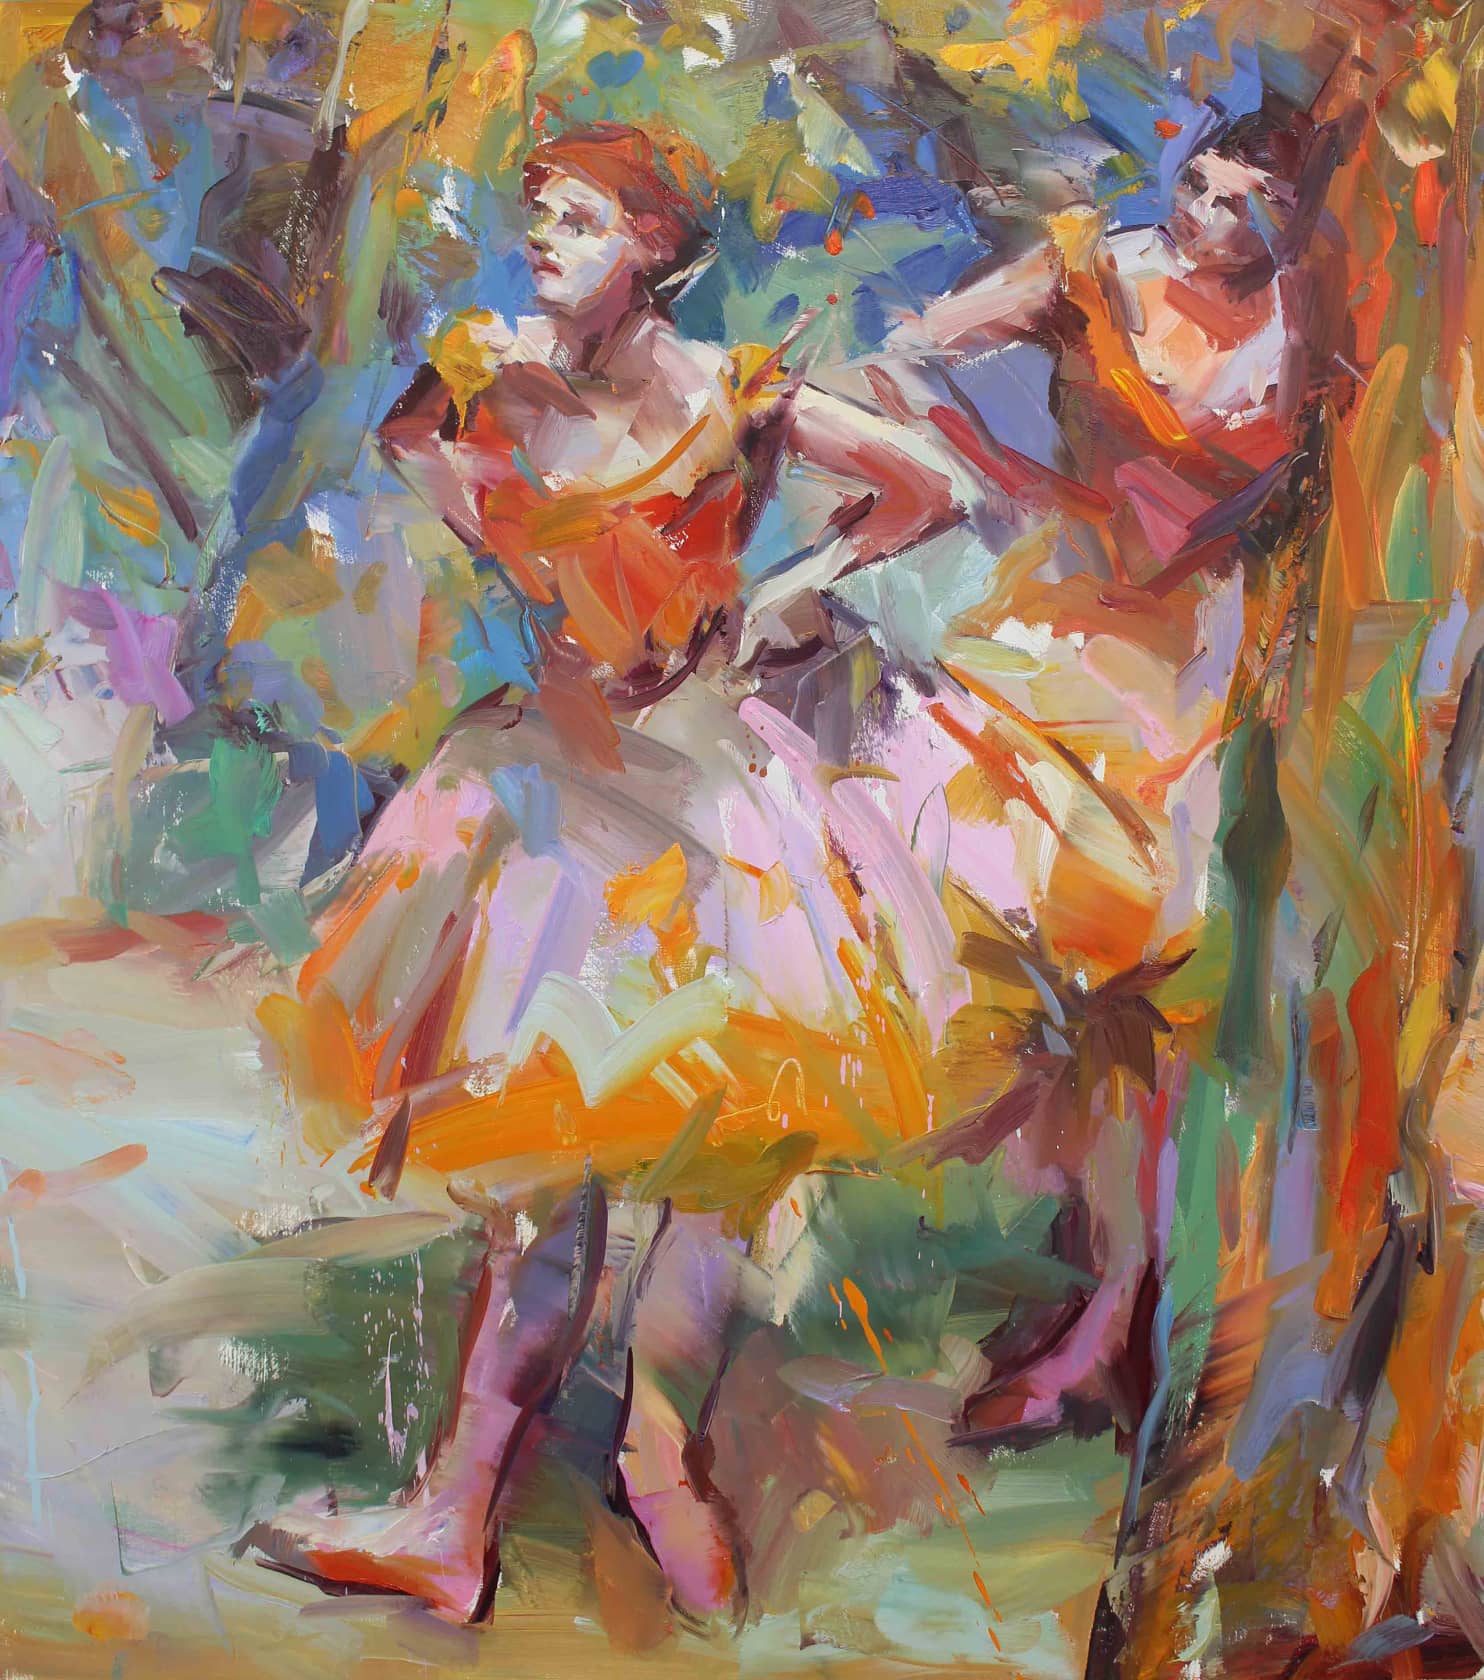 Paul Wright, Ballerina 2 (Tribute to Degas), 2017